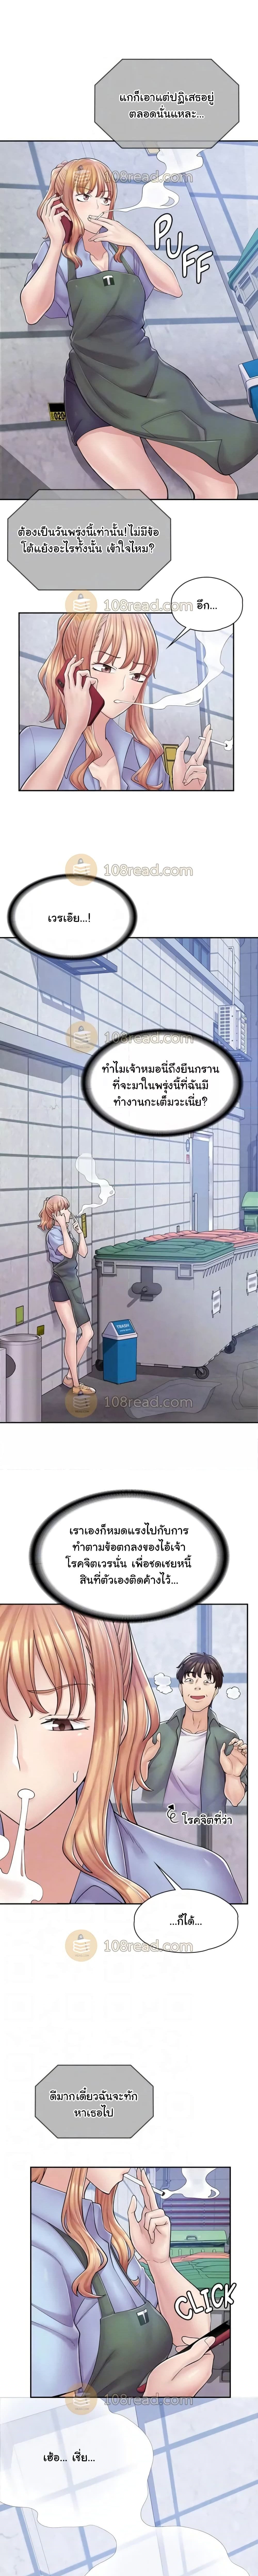 Erotic Manga Café Girls ตอนที่ 5 ภาพ 4